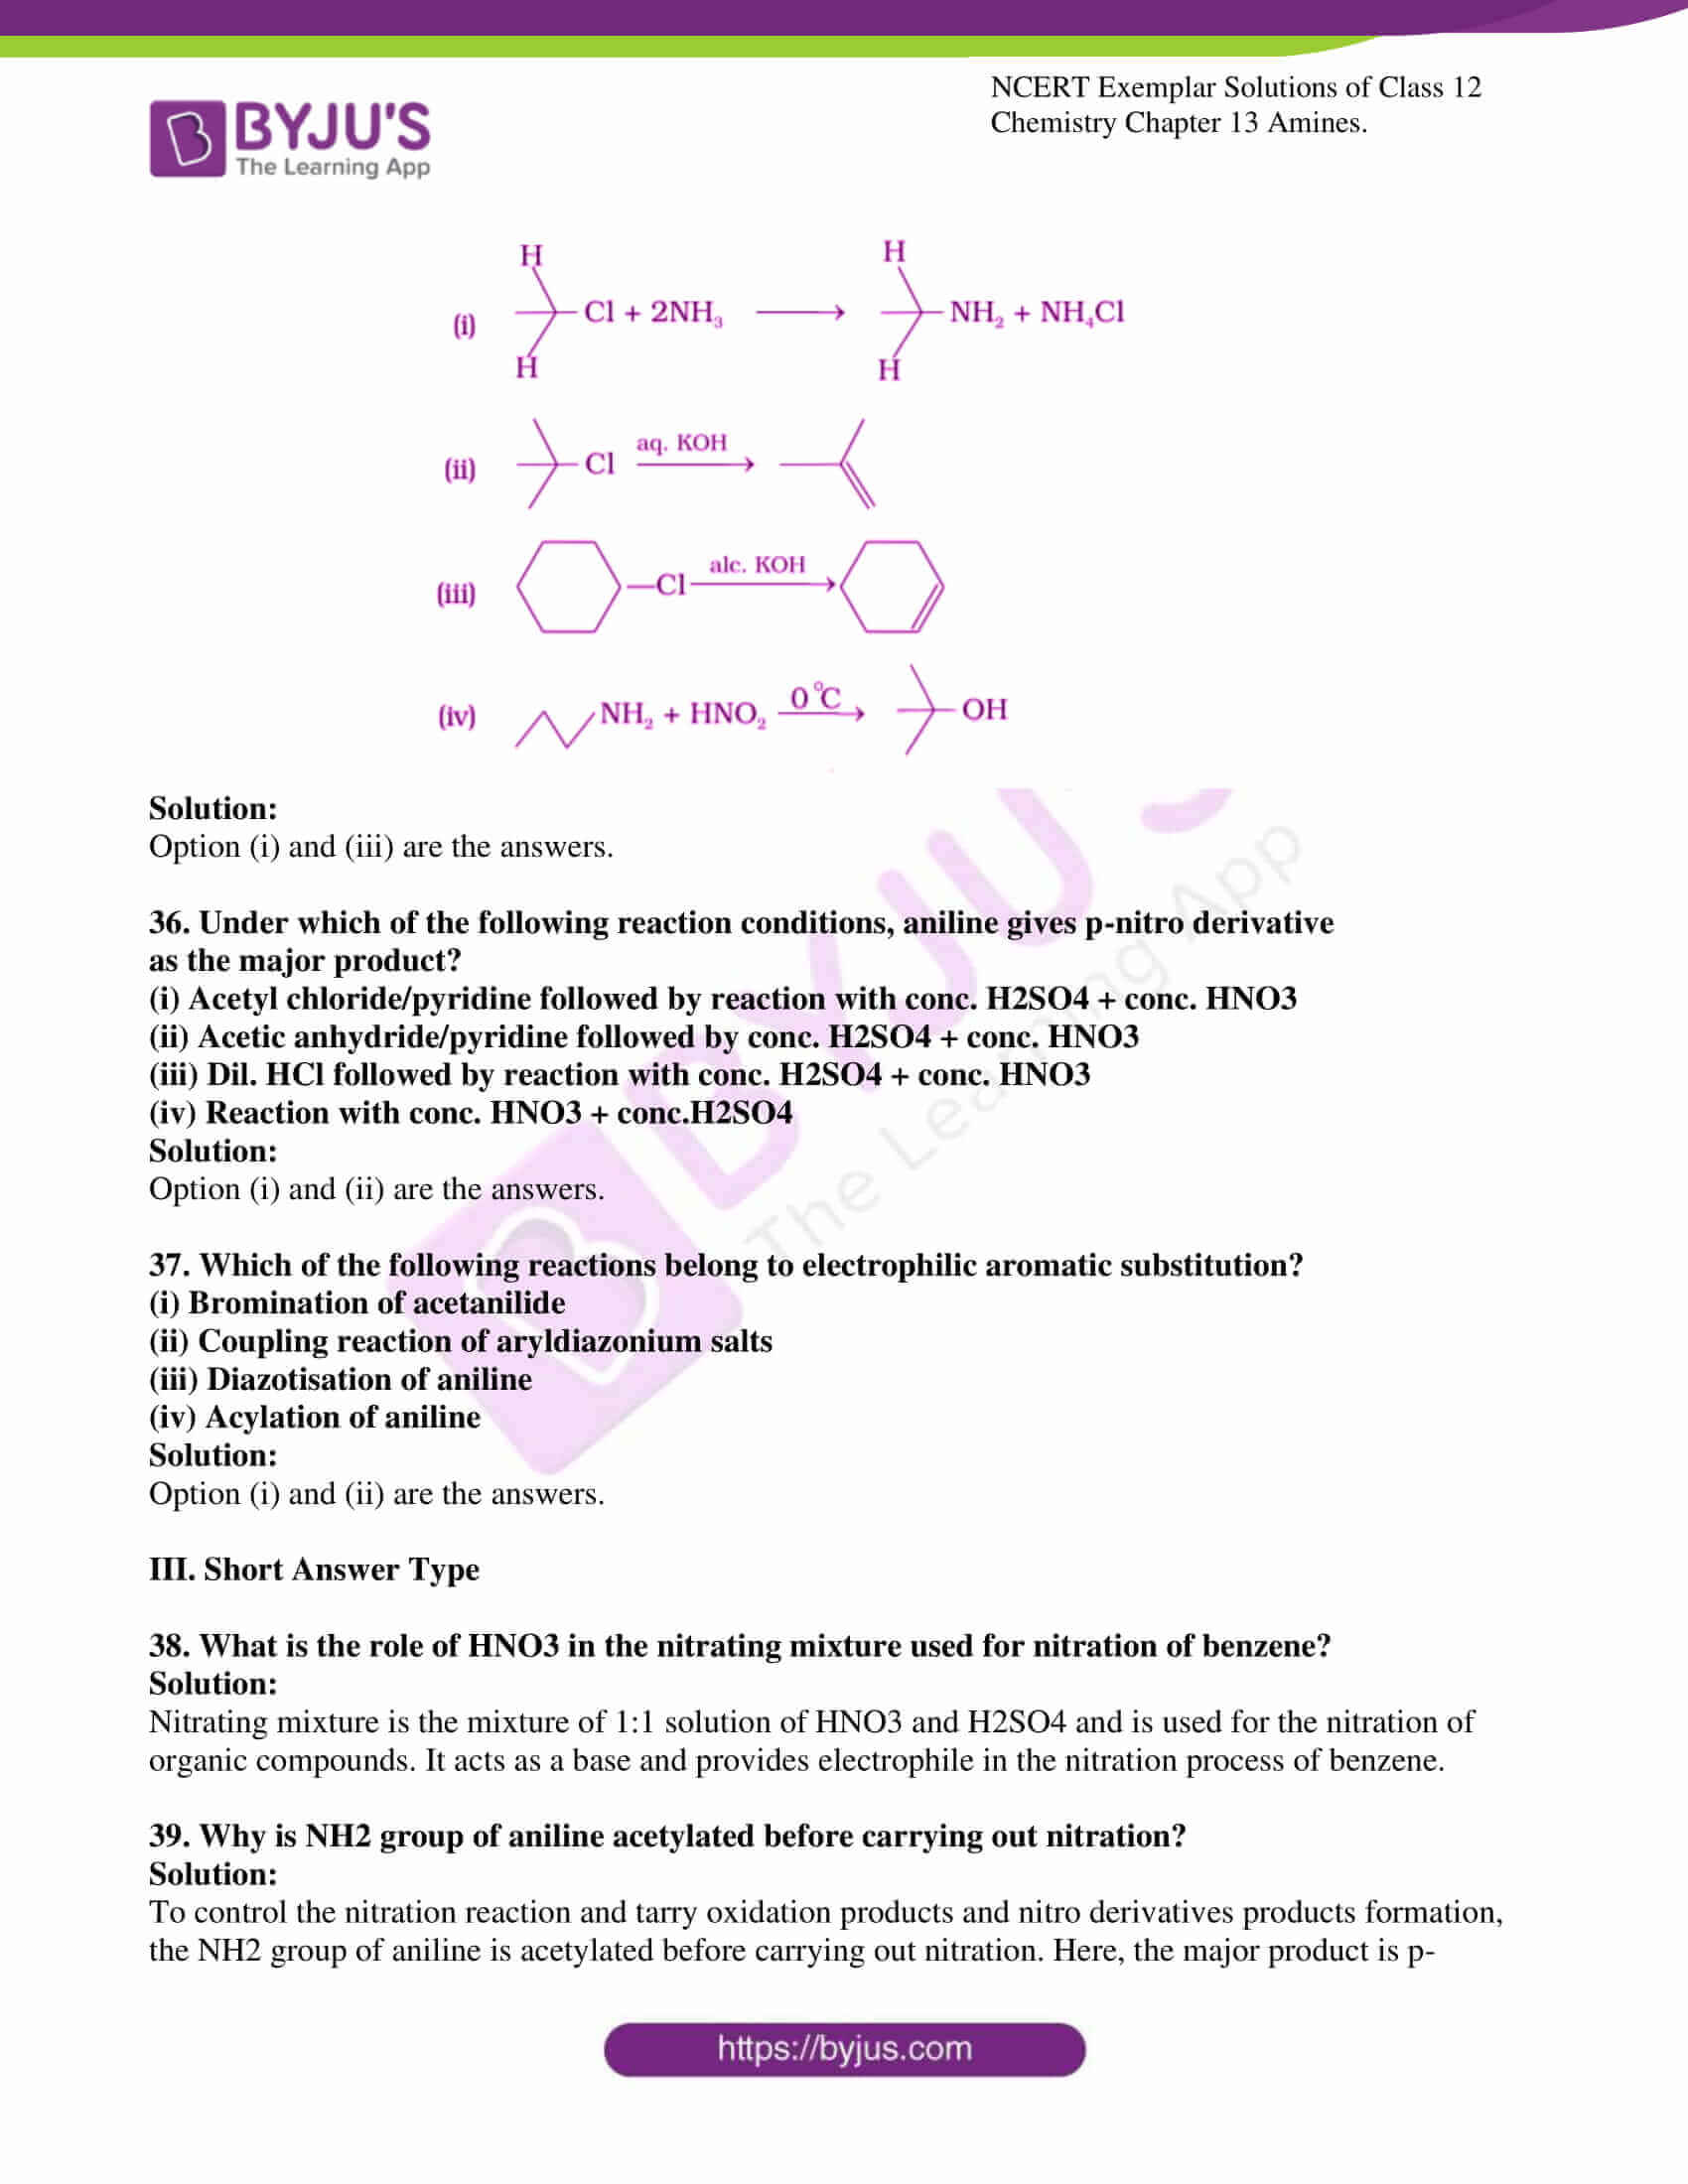 NCERT Exemplar Class 12 Chemistry Solutions Chapter 13 ...